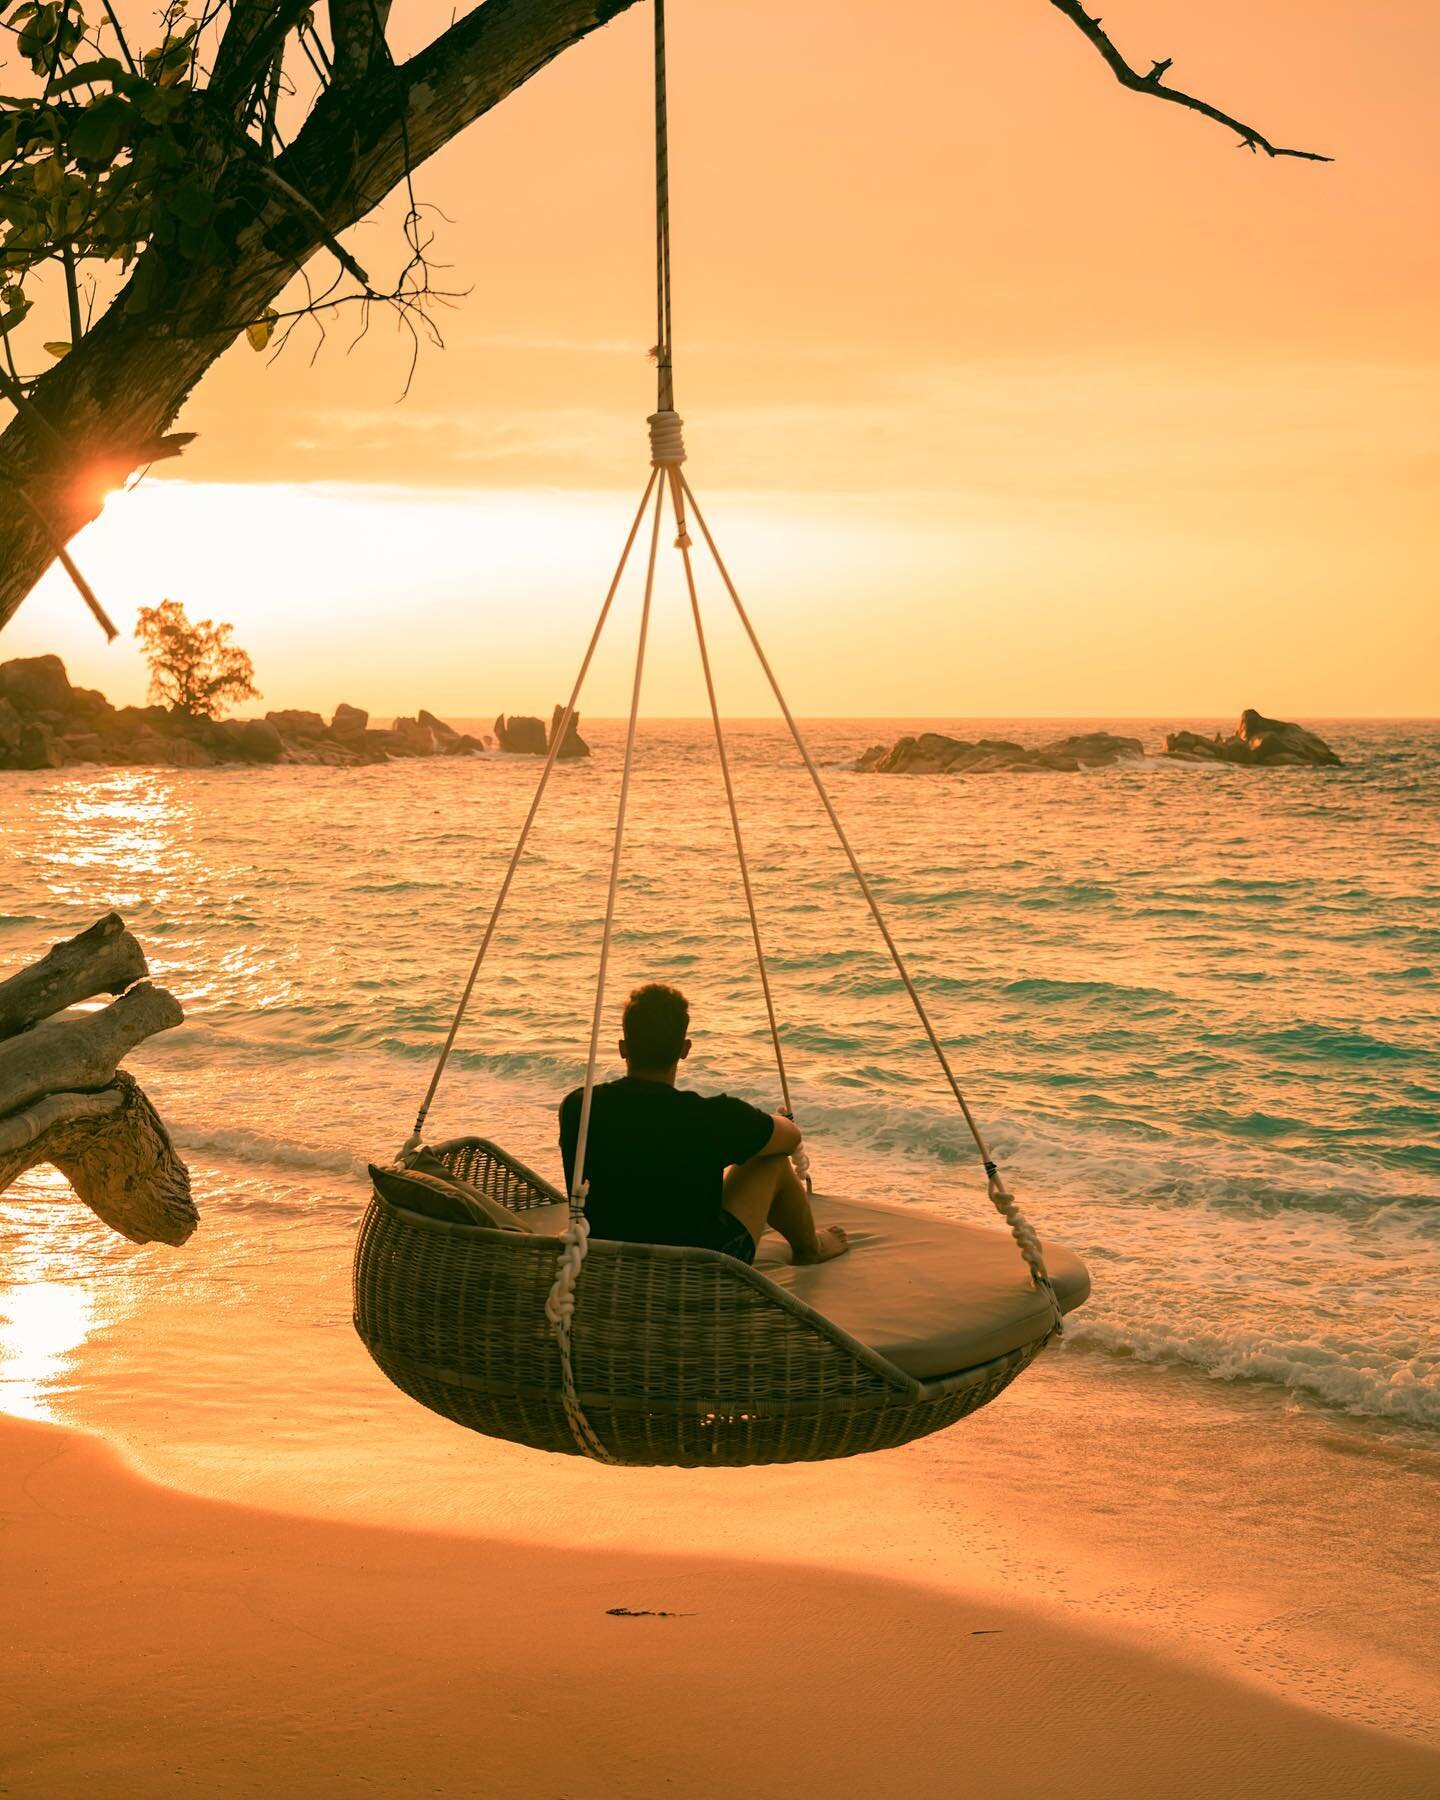 Follow the sun ☀️ 

#SeychellesSunset #Sunselover #Islandlife